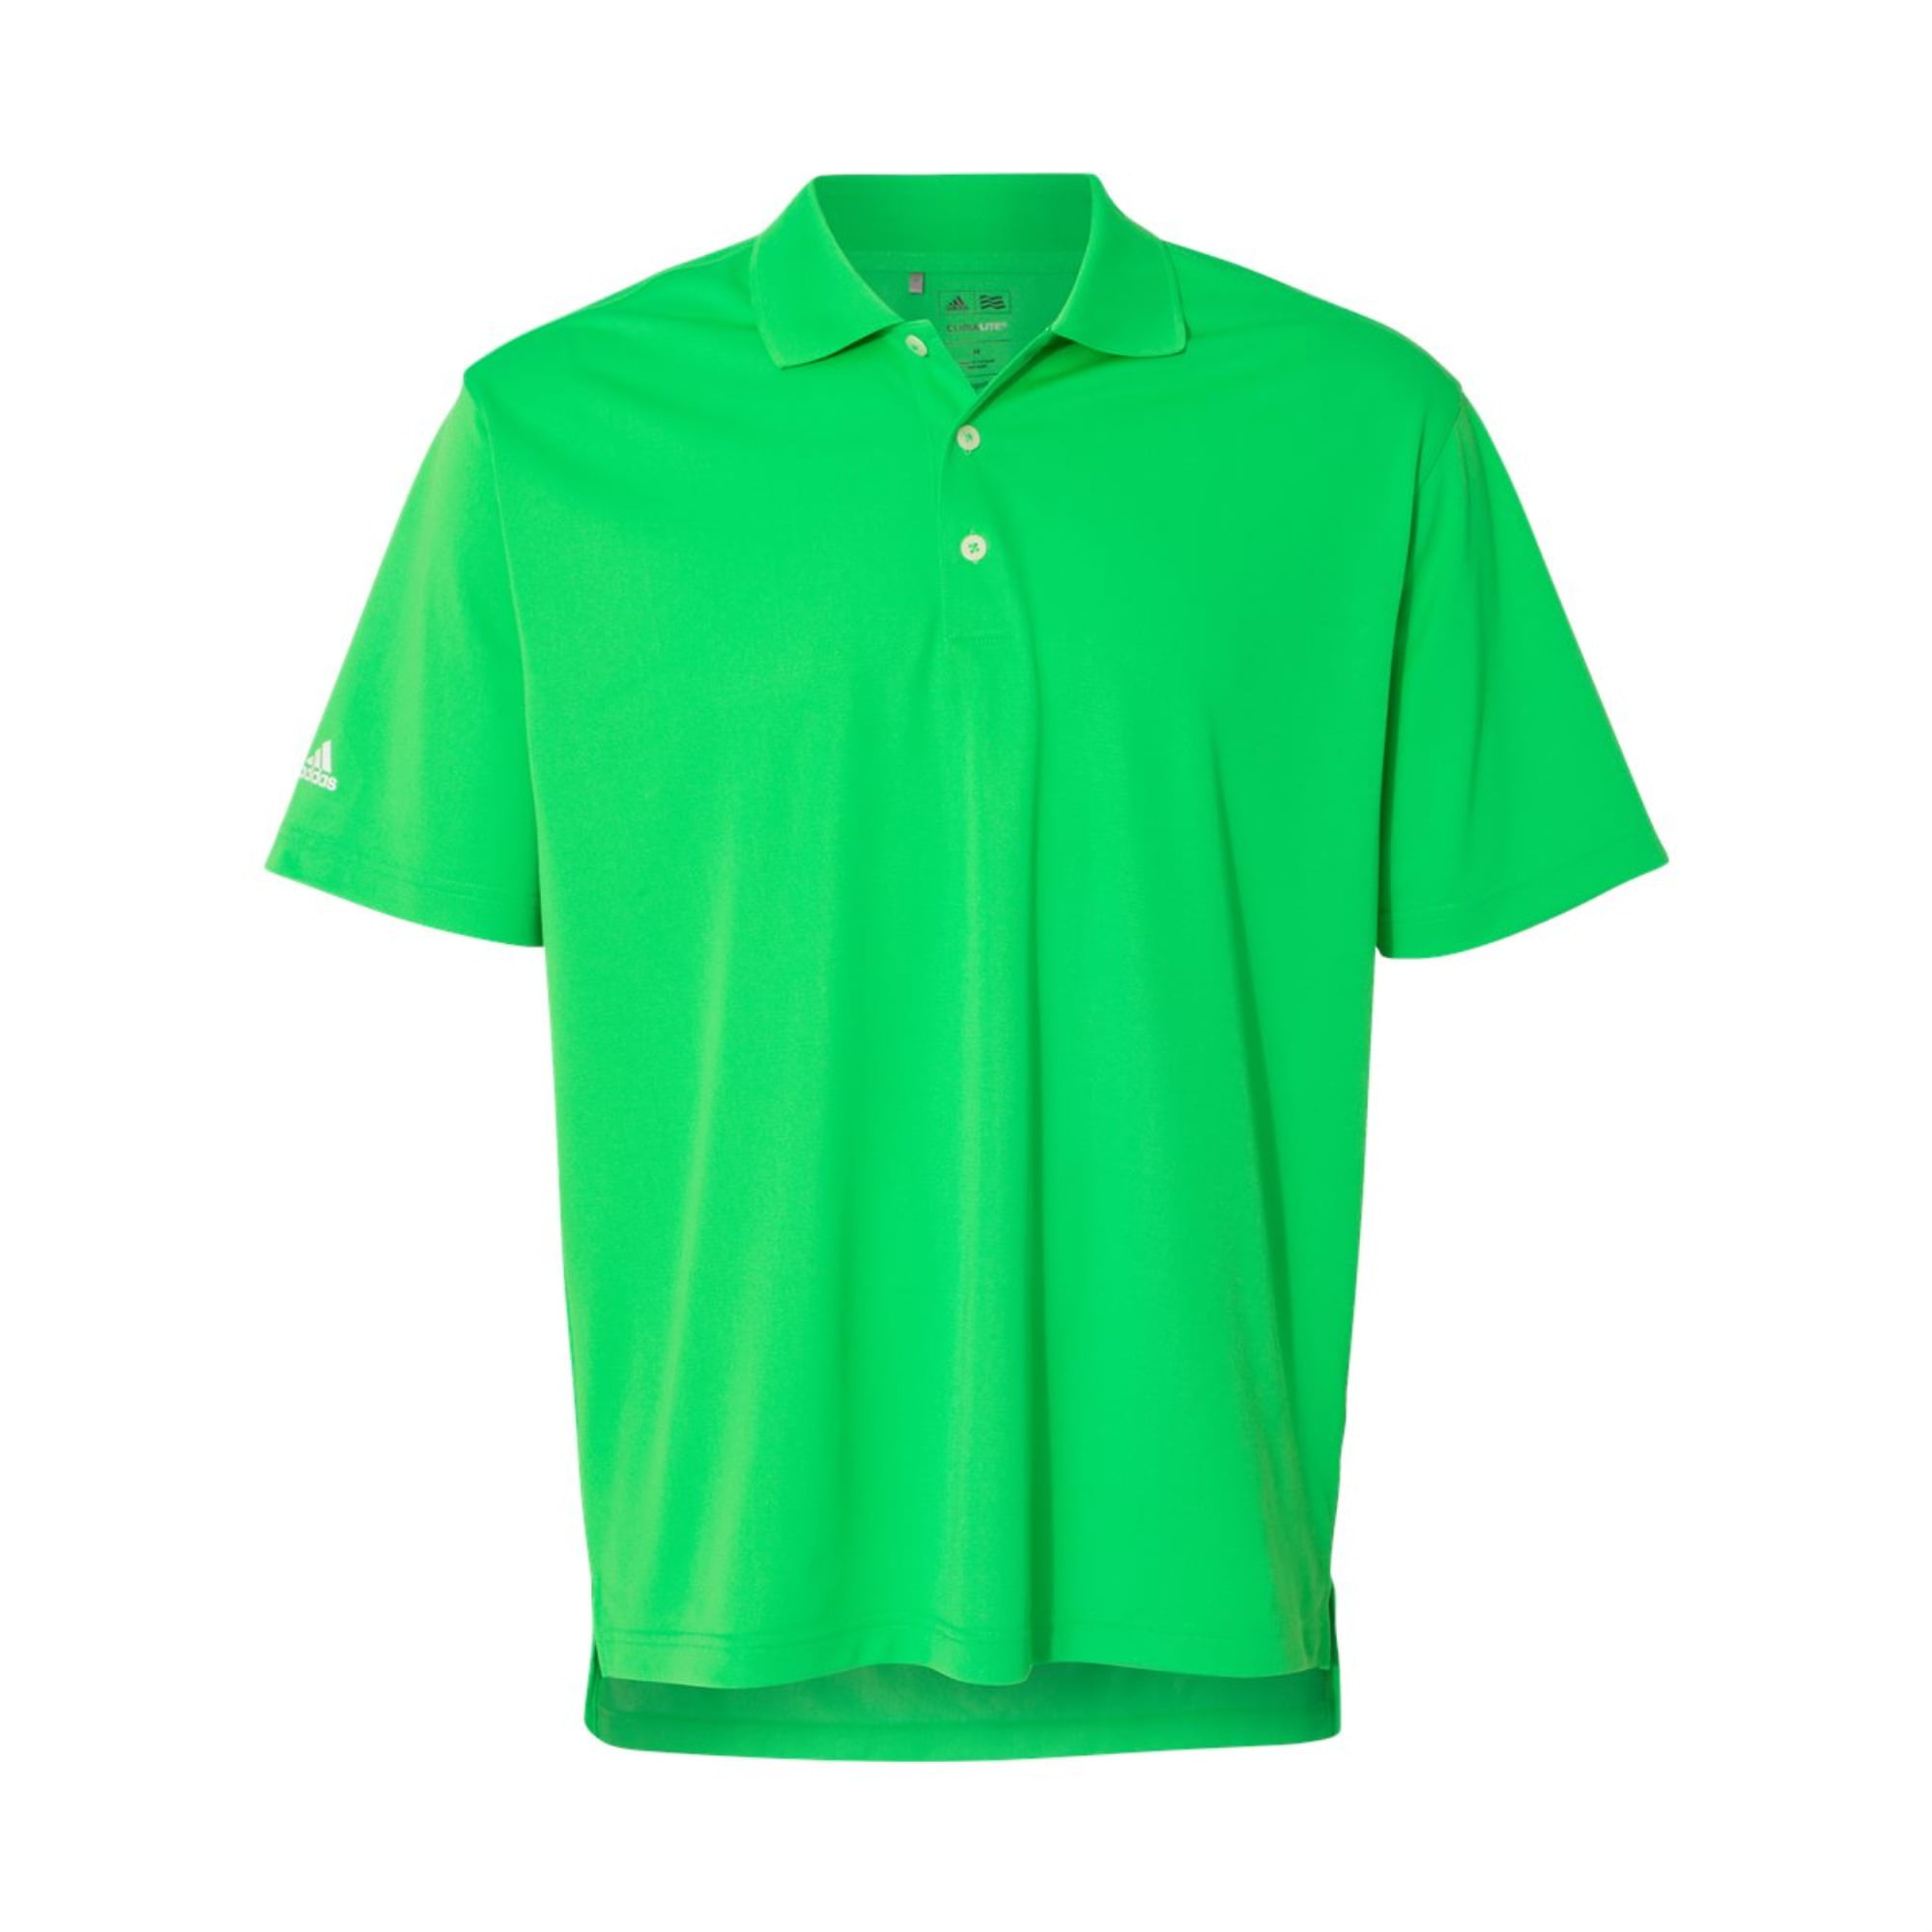 adidas Golf Men's Branded Performance Polo Shirt. Medium - Walmart.com